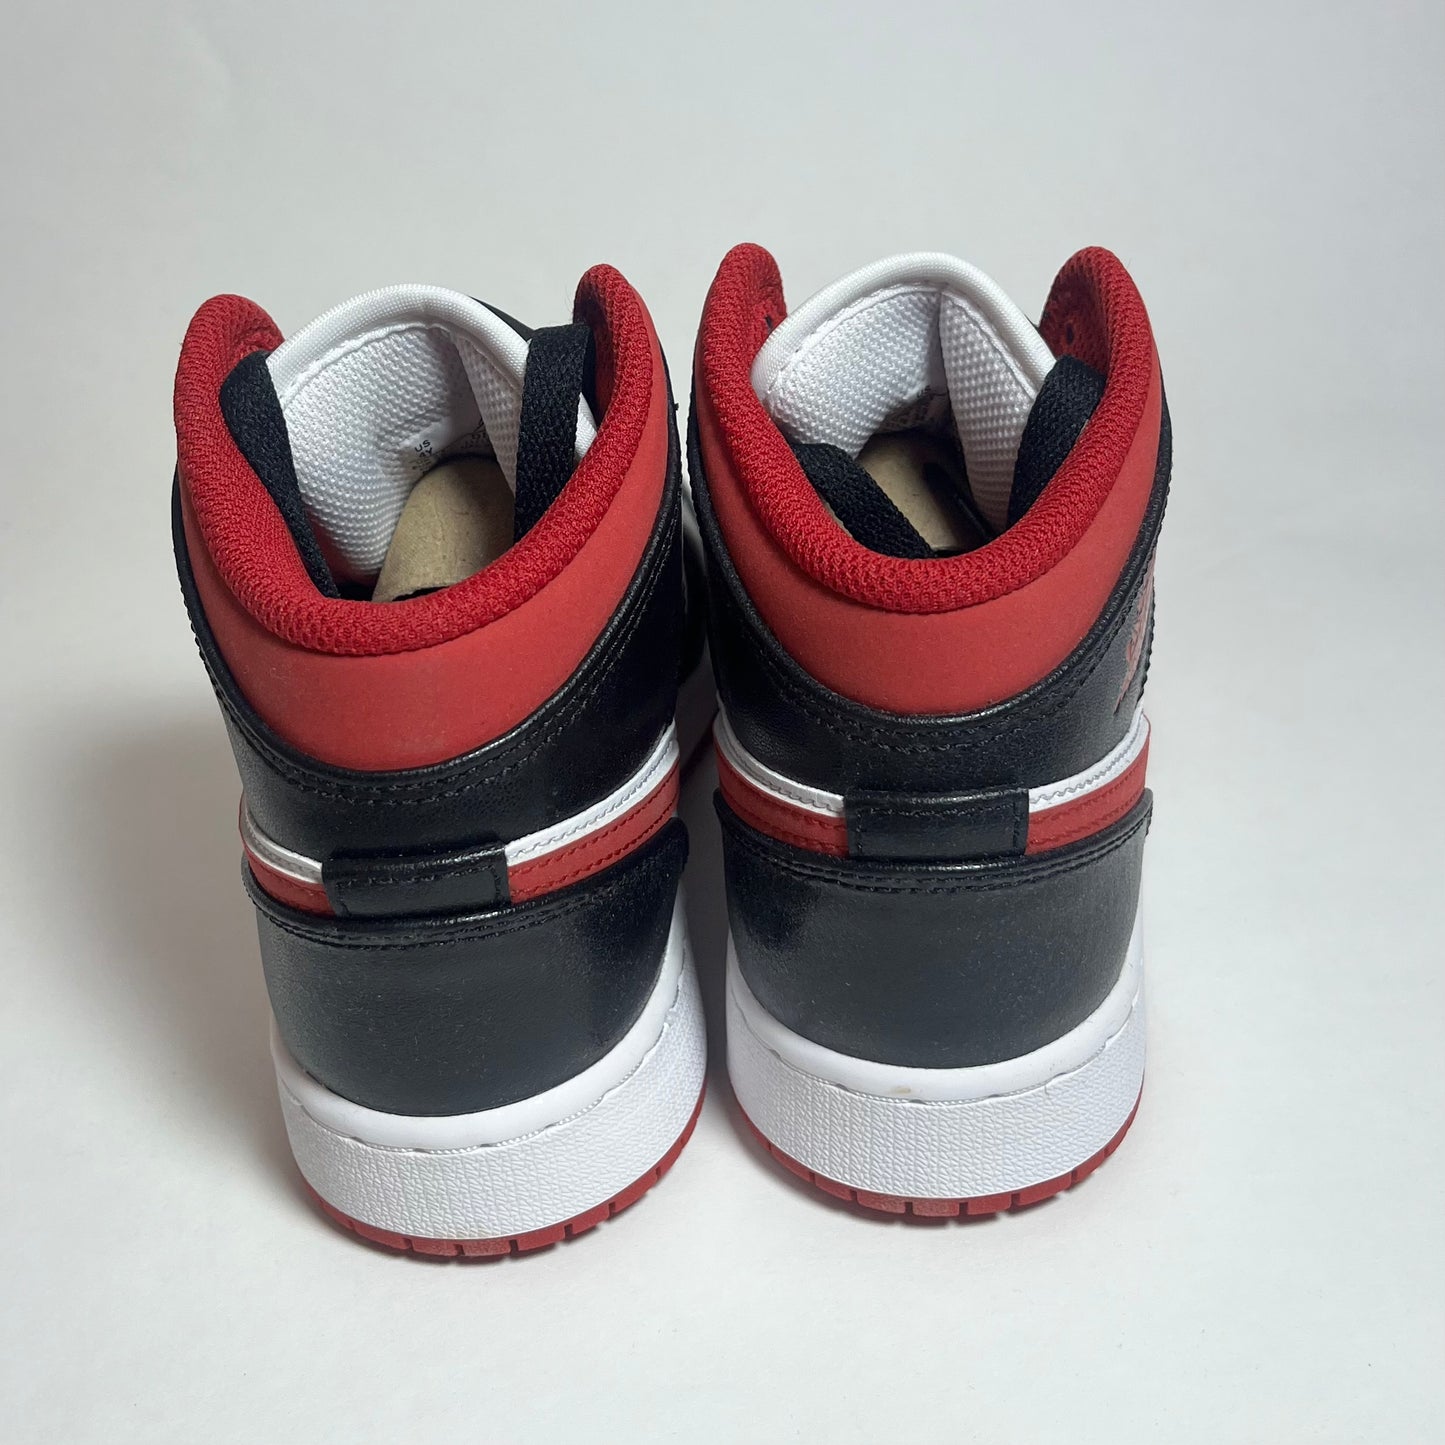 Nike - Air Jordan 1 "Gym Red" Mid